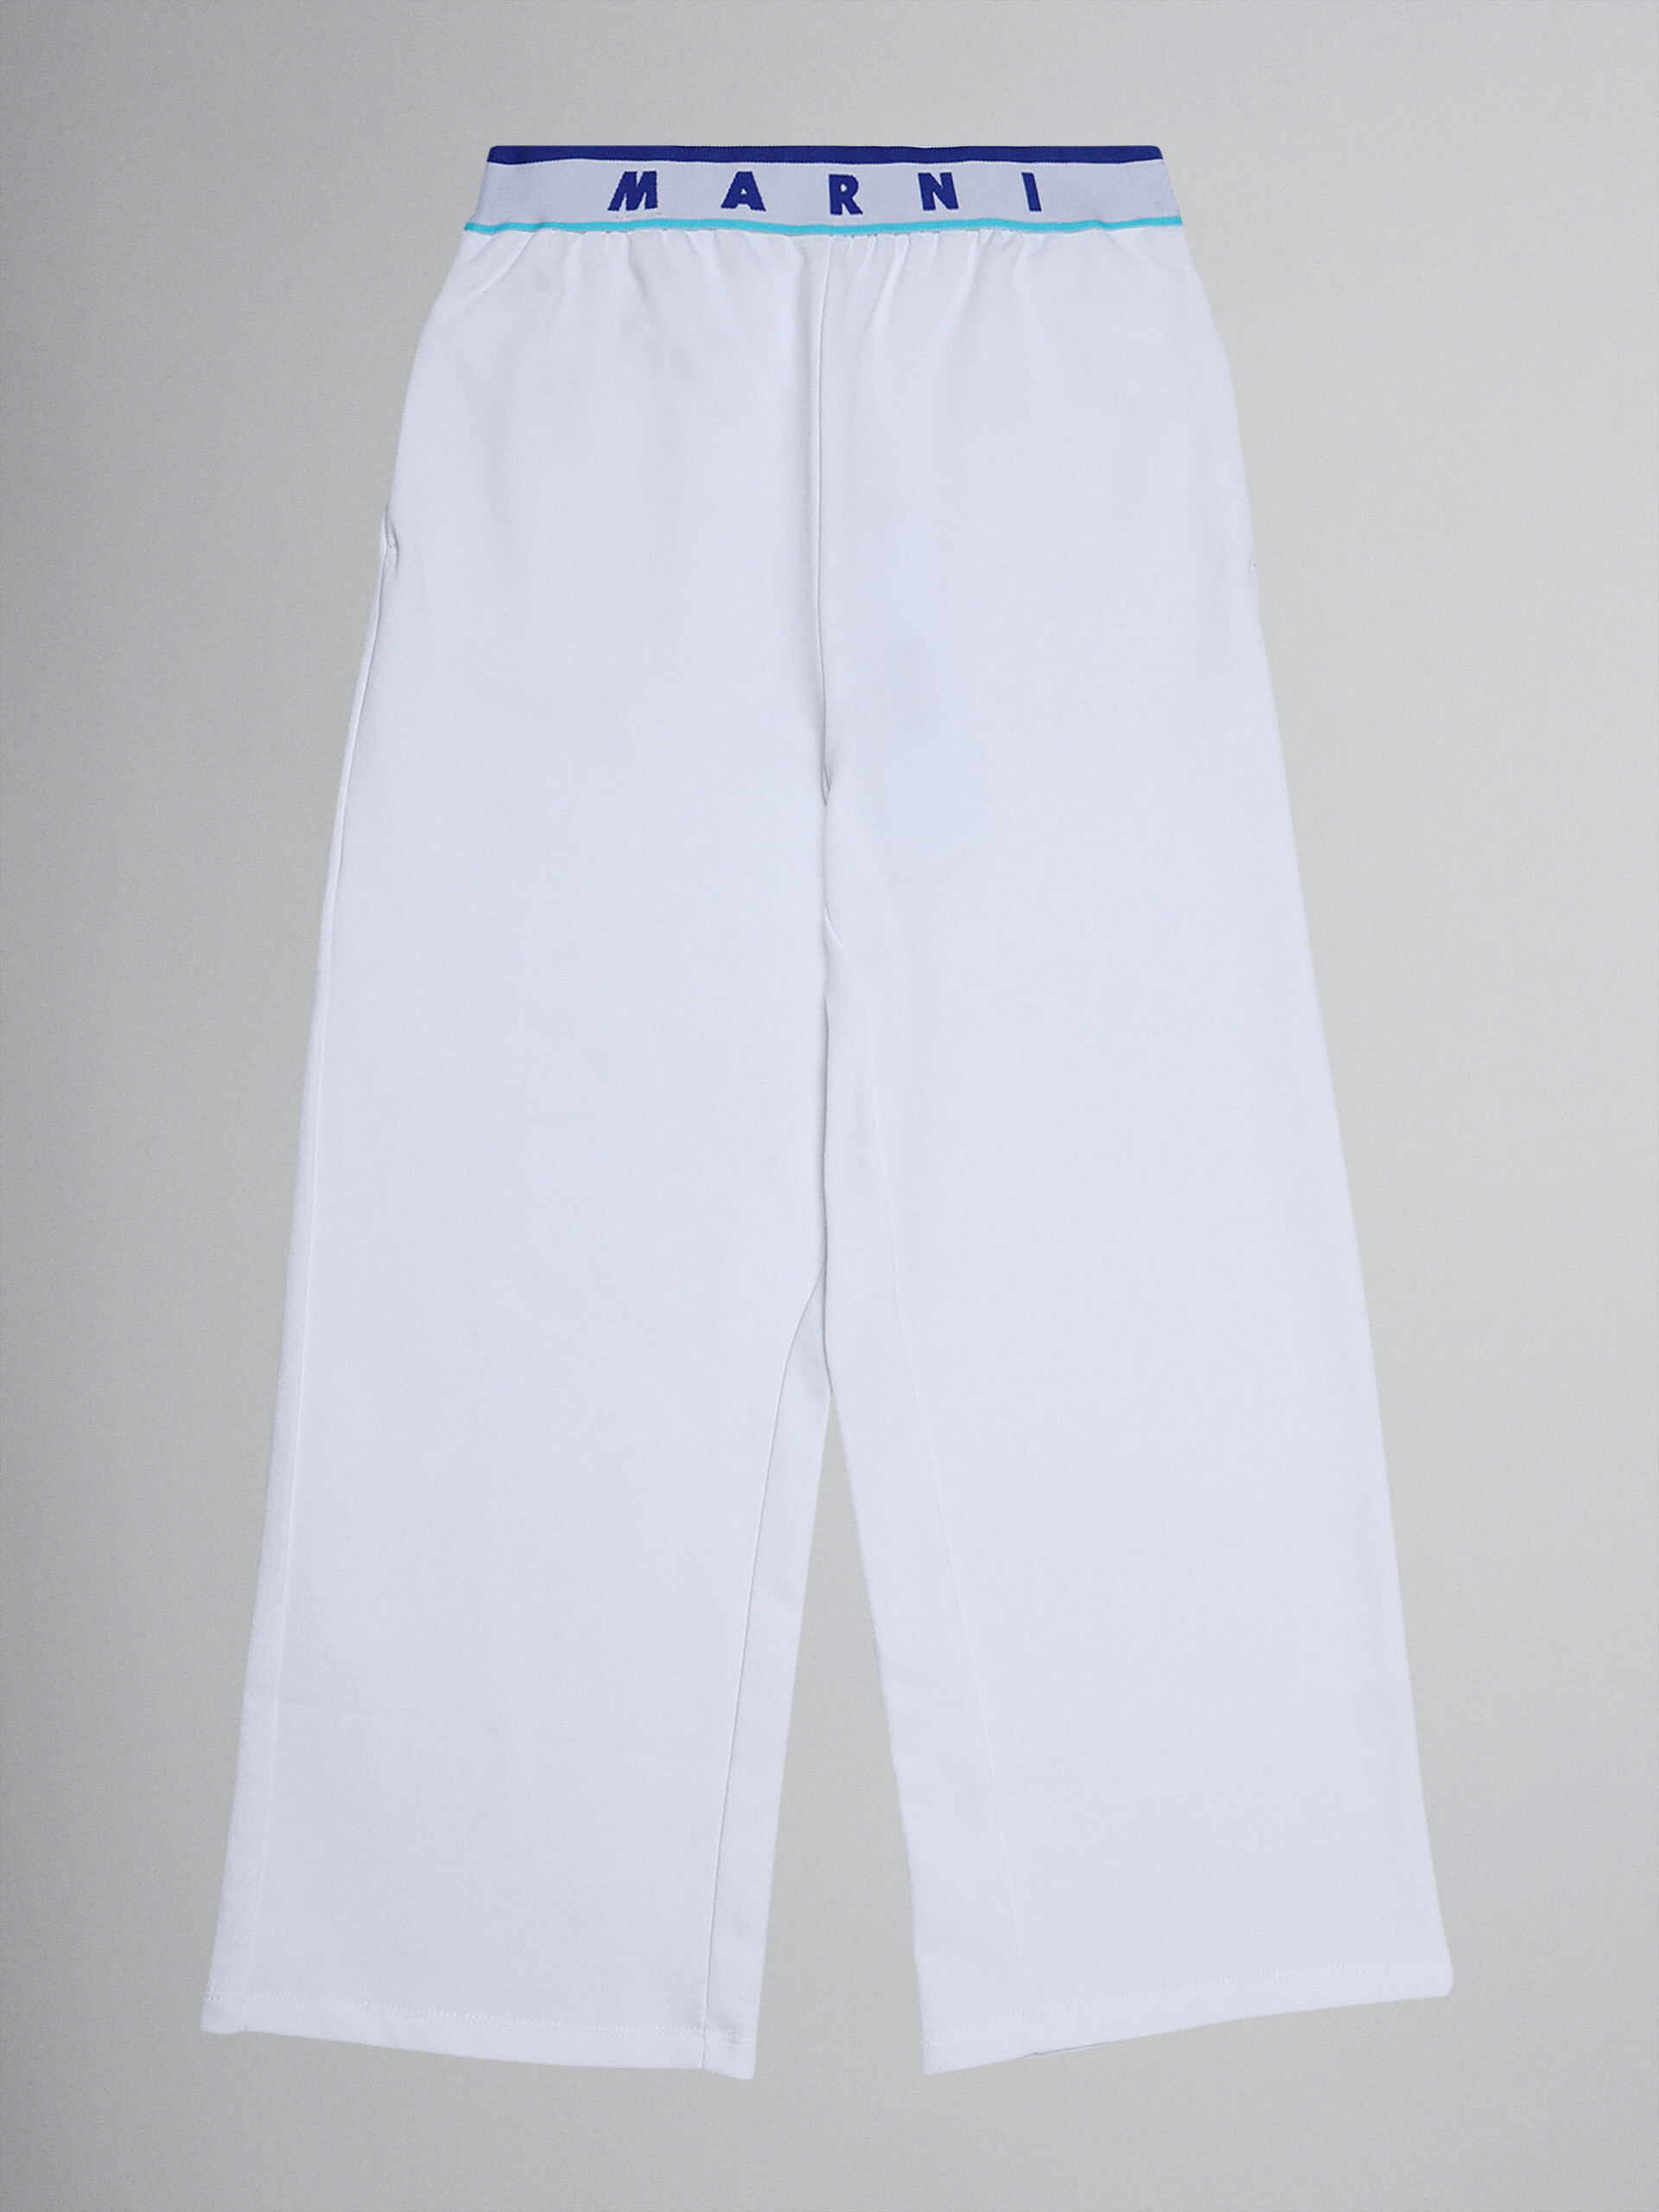 Logo white sweatshirt cotton track pants - Pants - Image 2